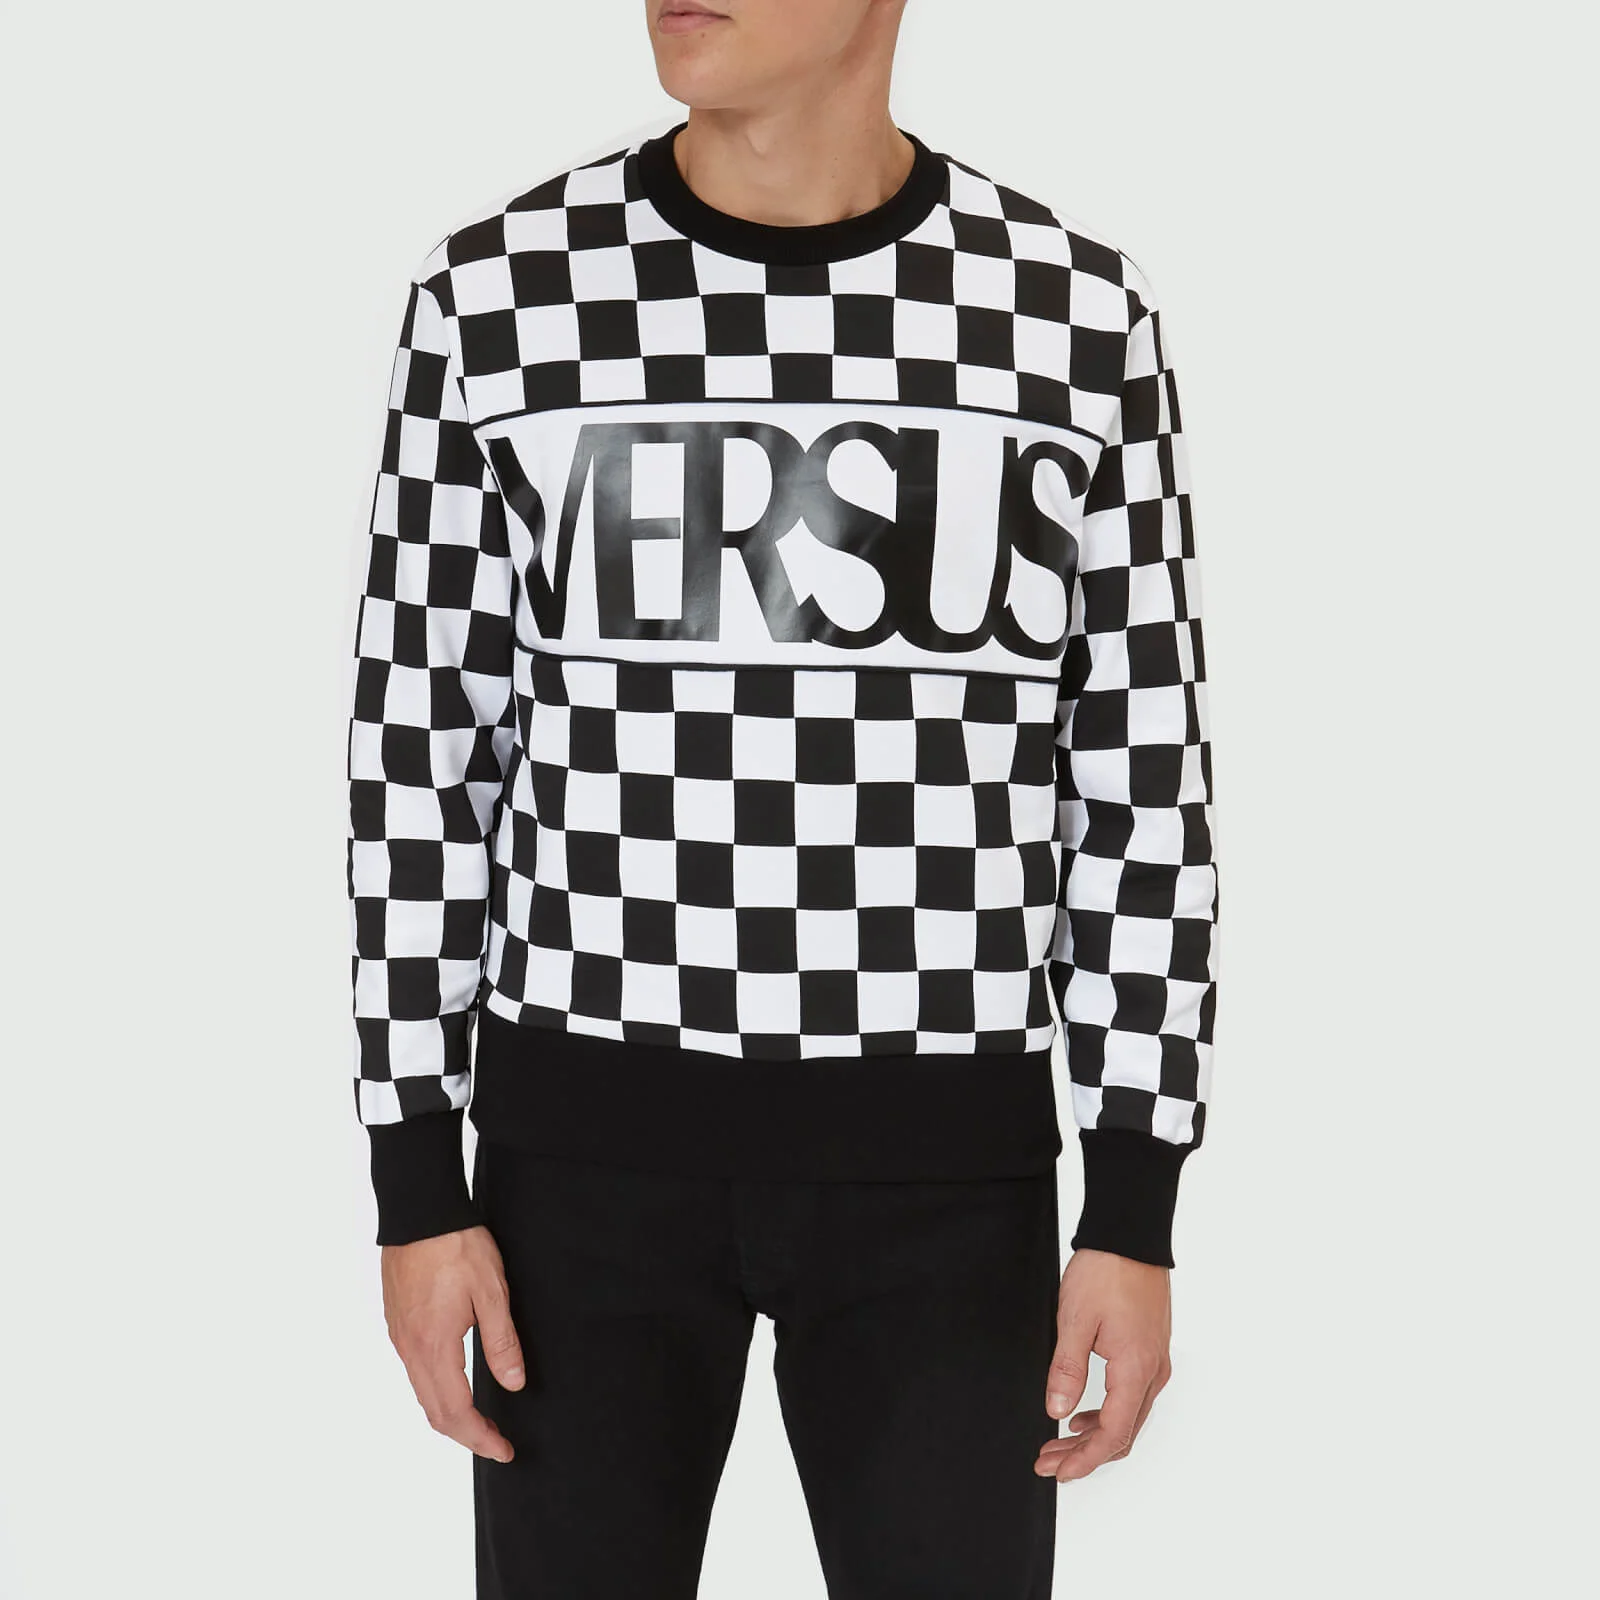 Versus Versace Men's Check Logo Sweatshirt - Black/White Image 1